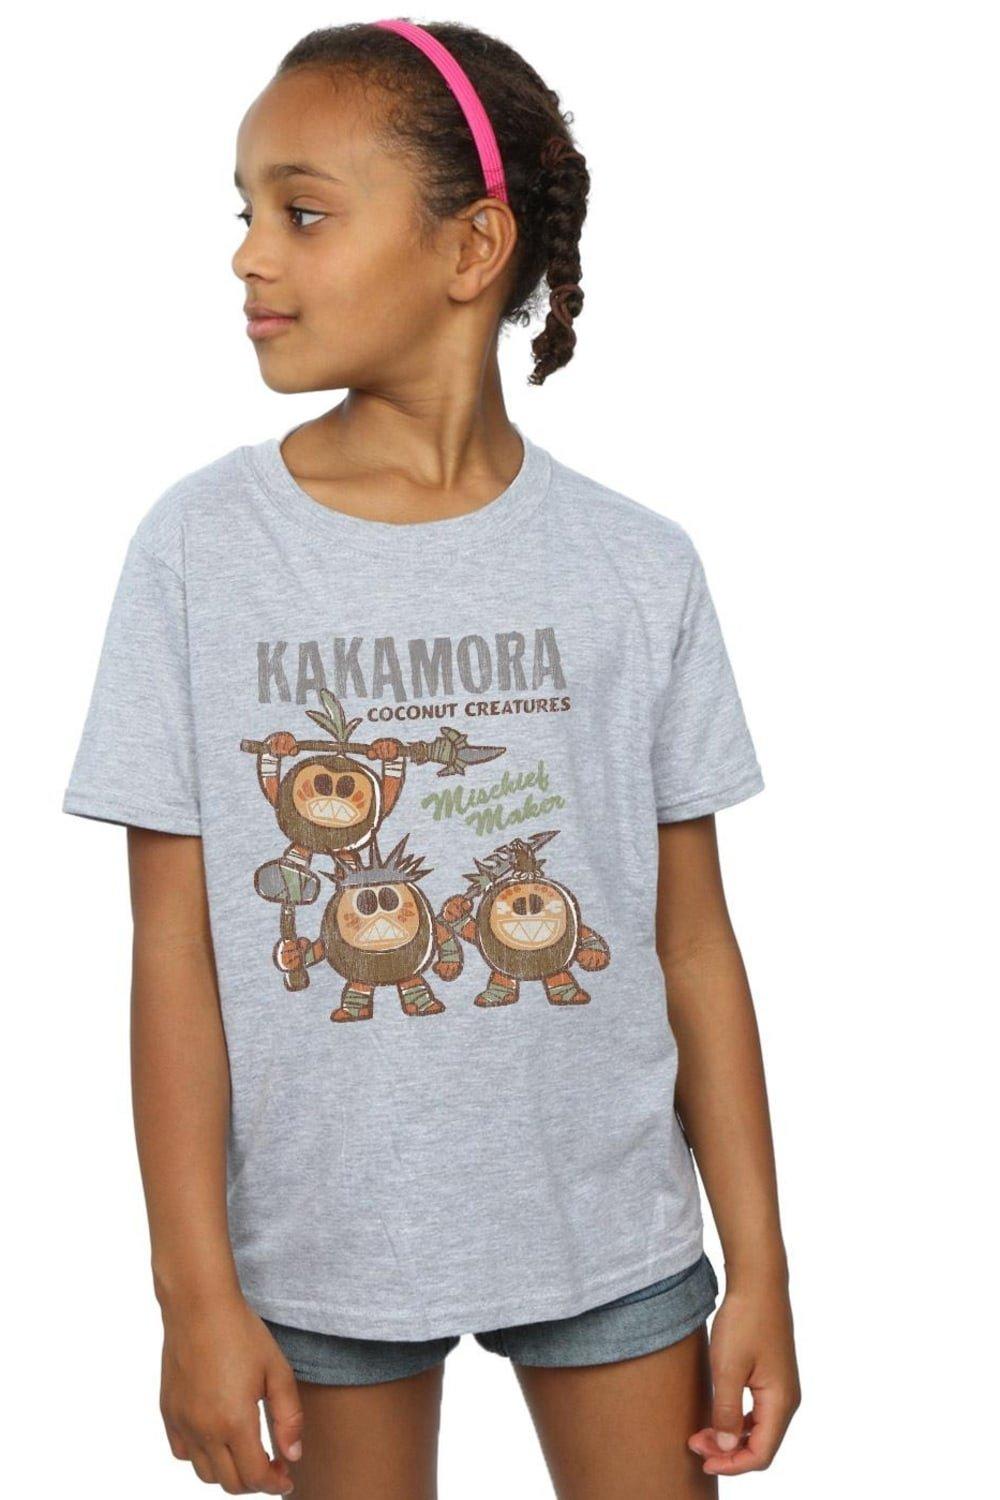 наст игр мх моана остров какамора арт 1640 Хлопковая футболка «Моана Какамора» Disney, серый